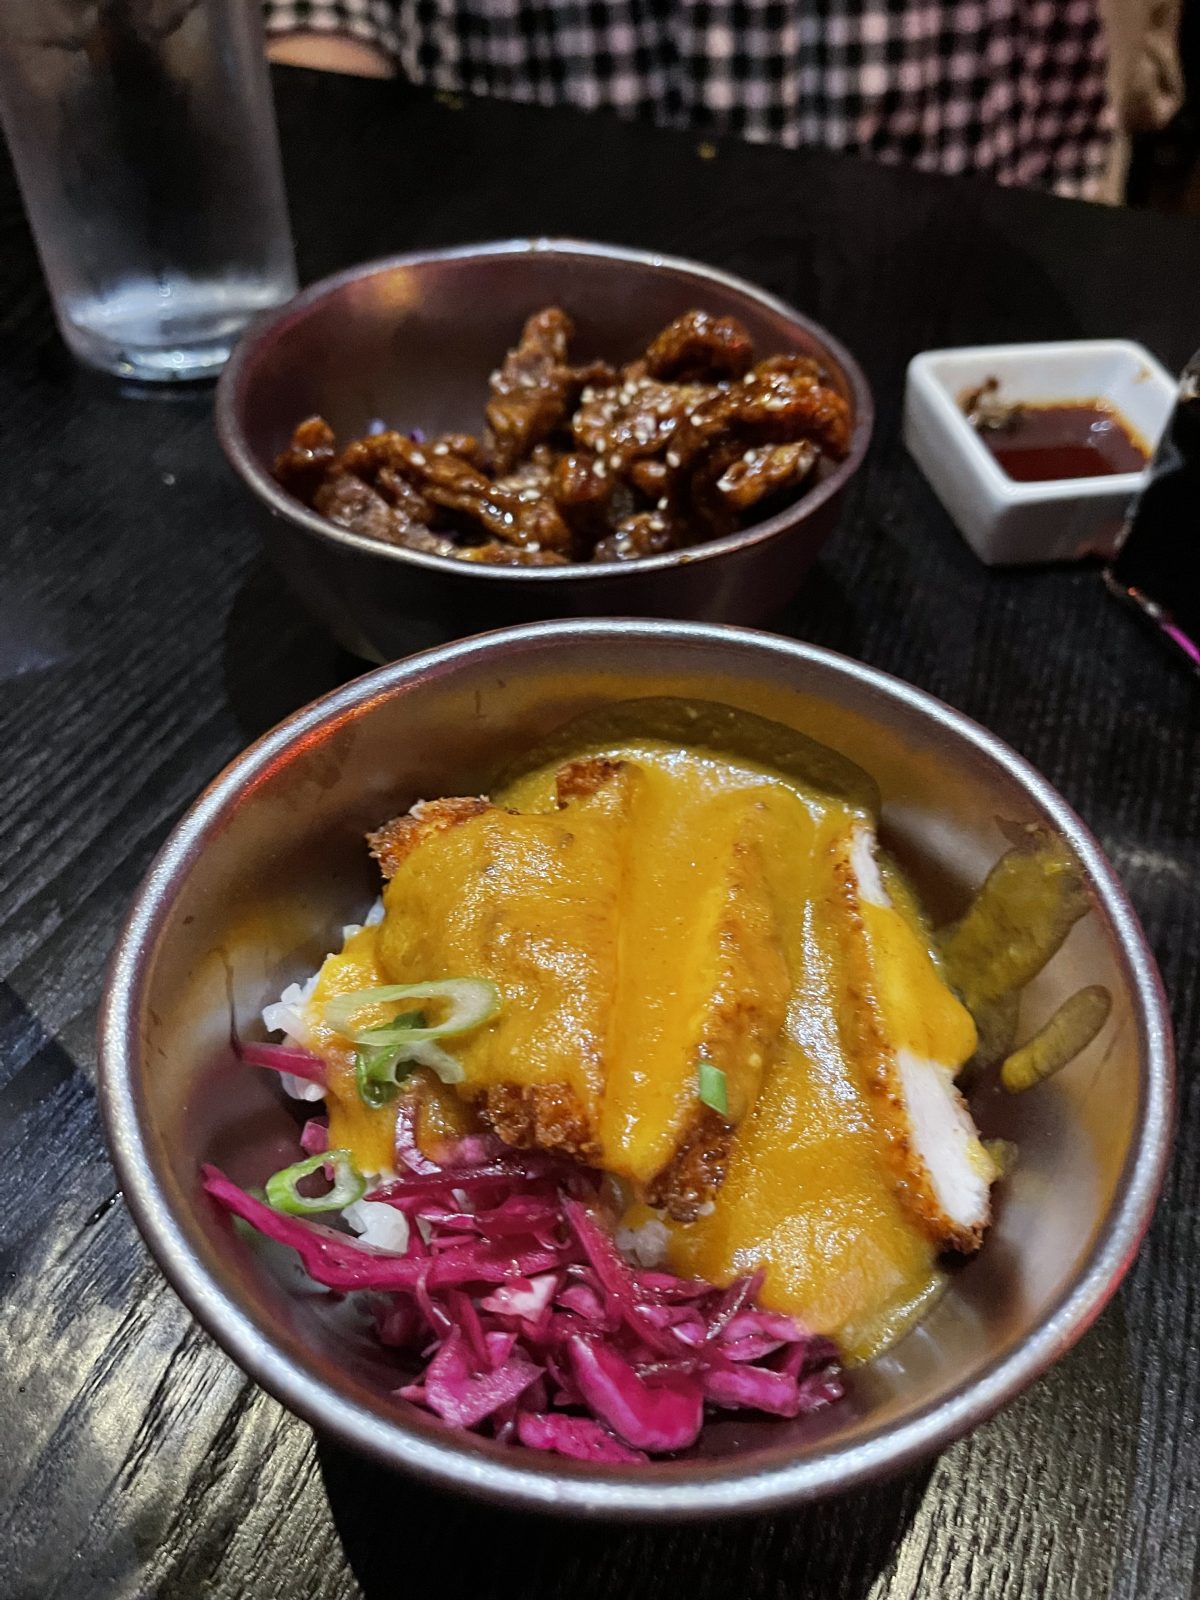 sakku dishes of katsu-style chicken and beef